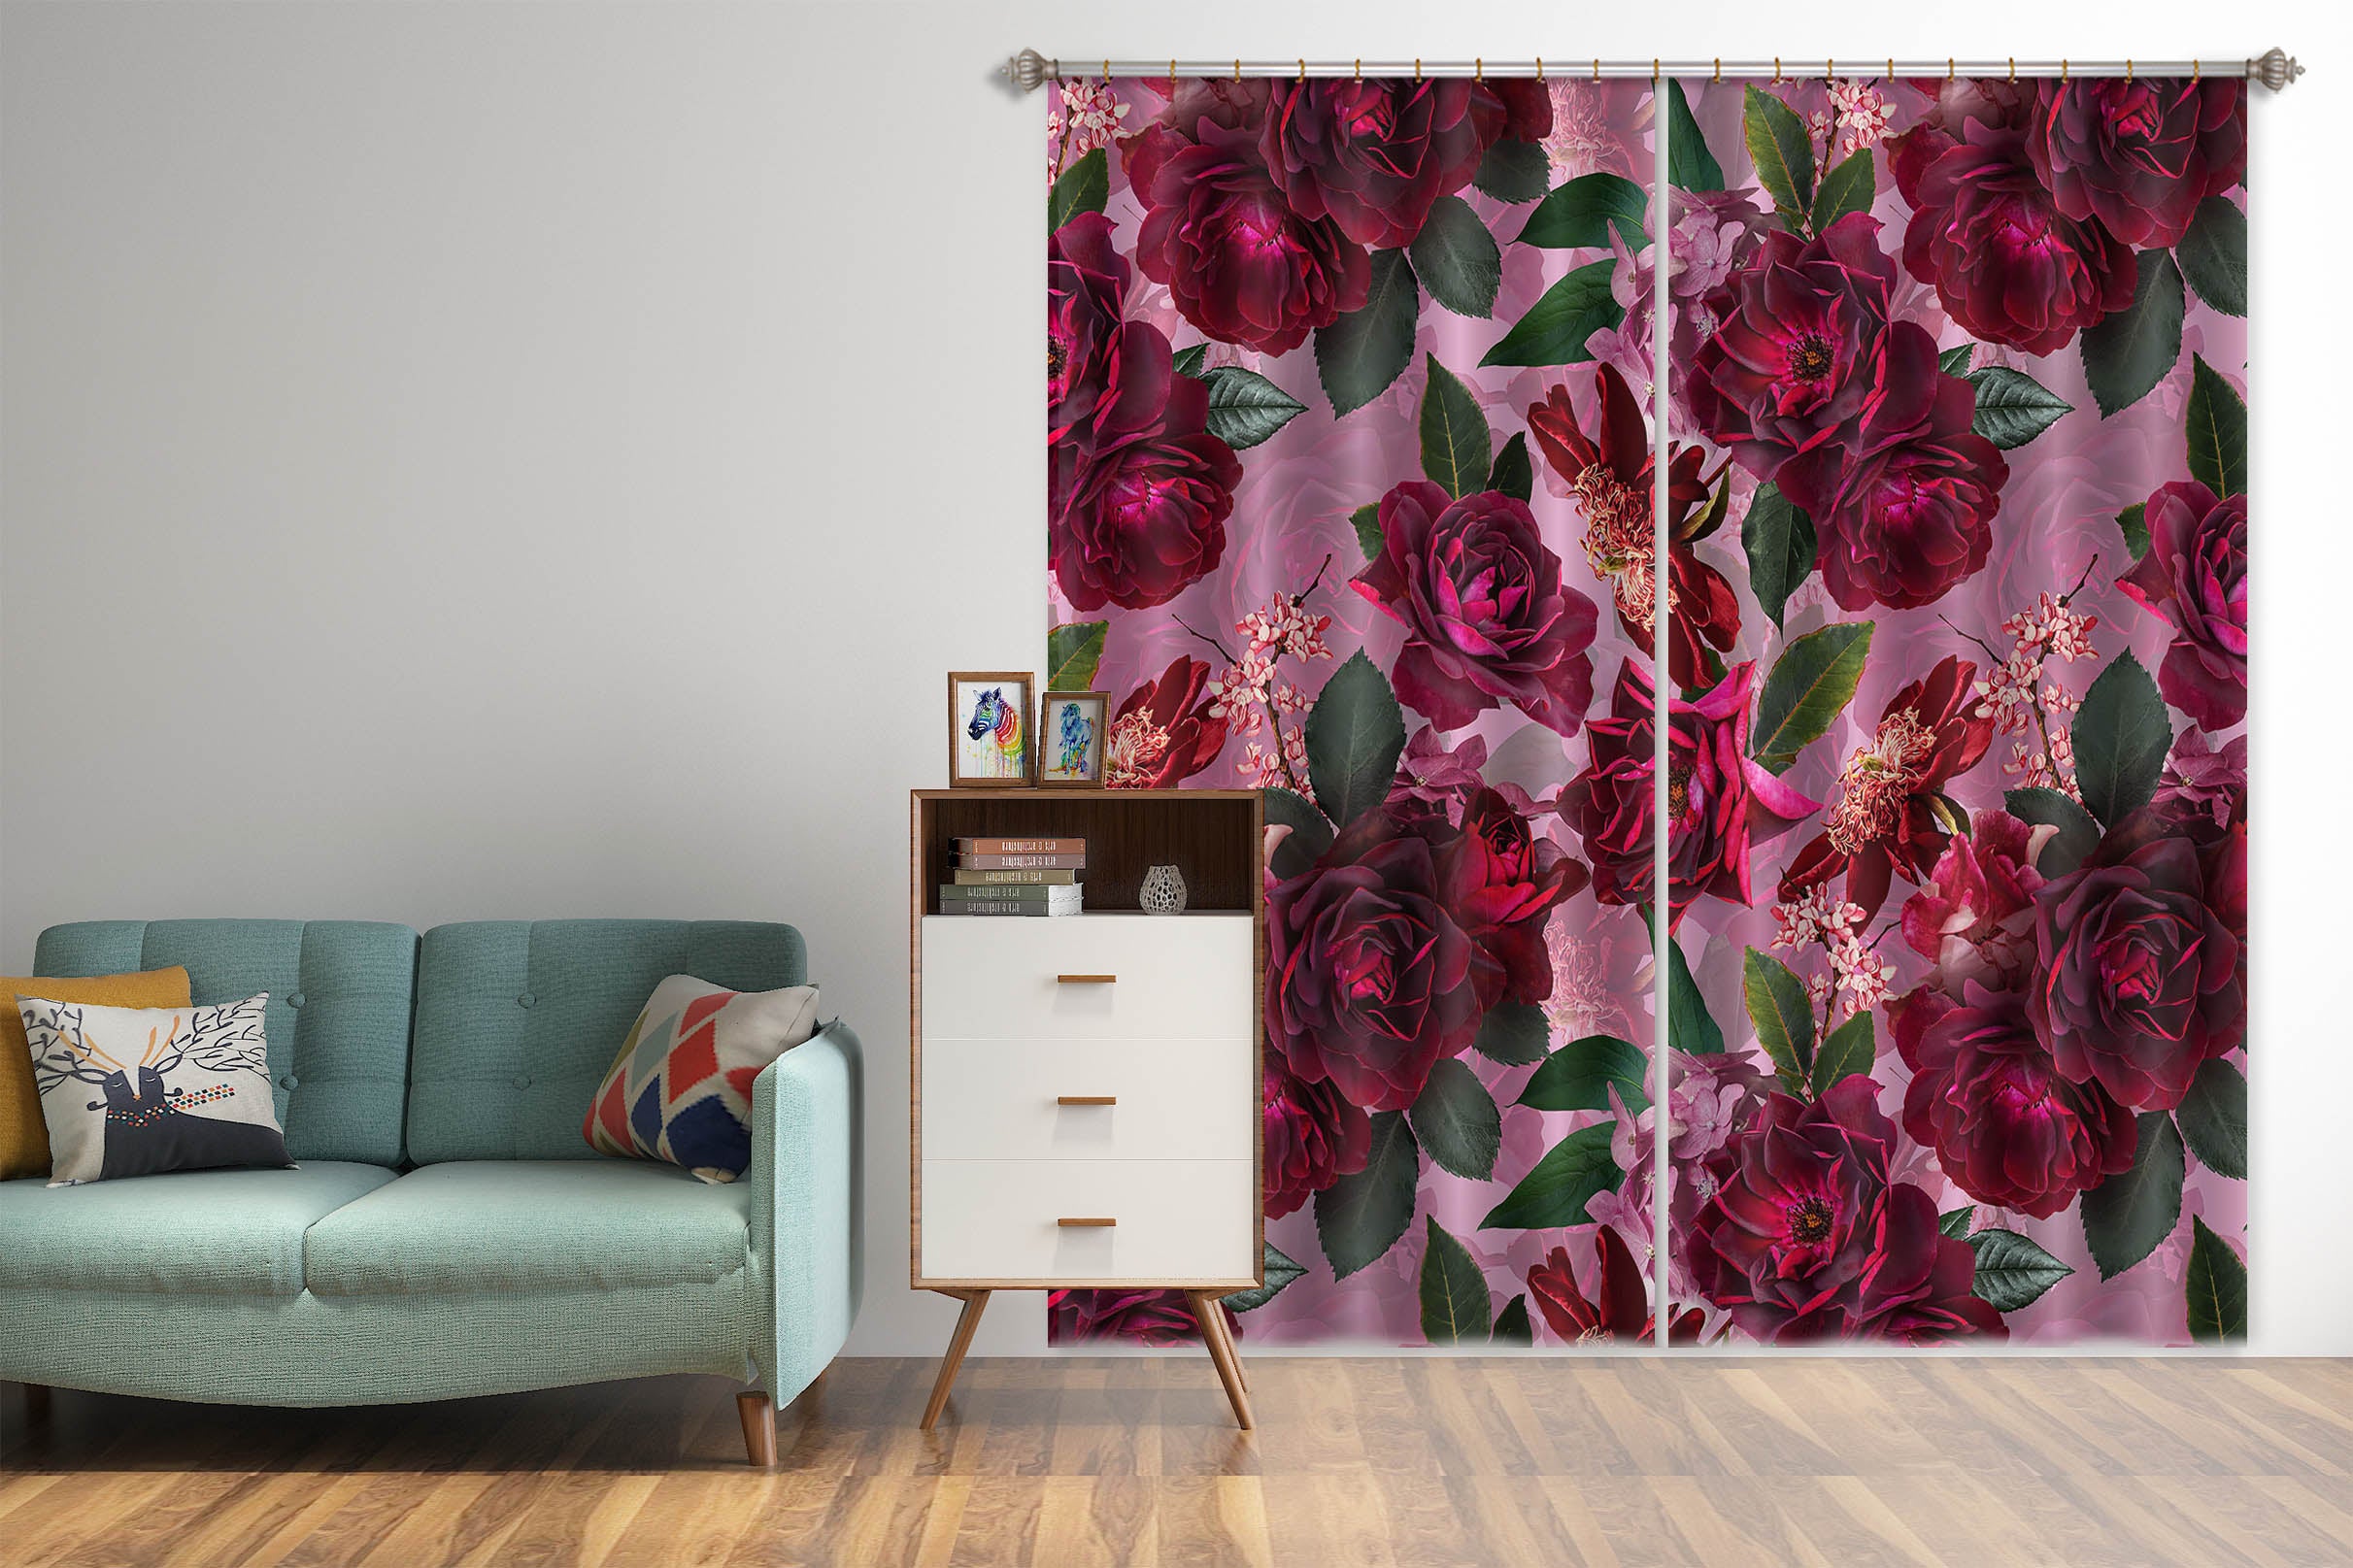 3D Purple Rose 120 Uta Naumann Curtain Curtains Drapes